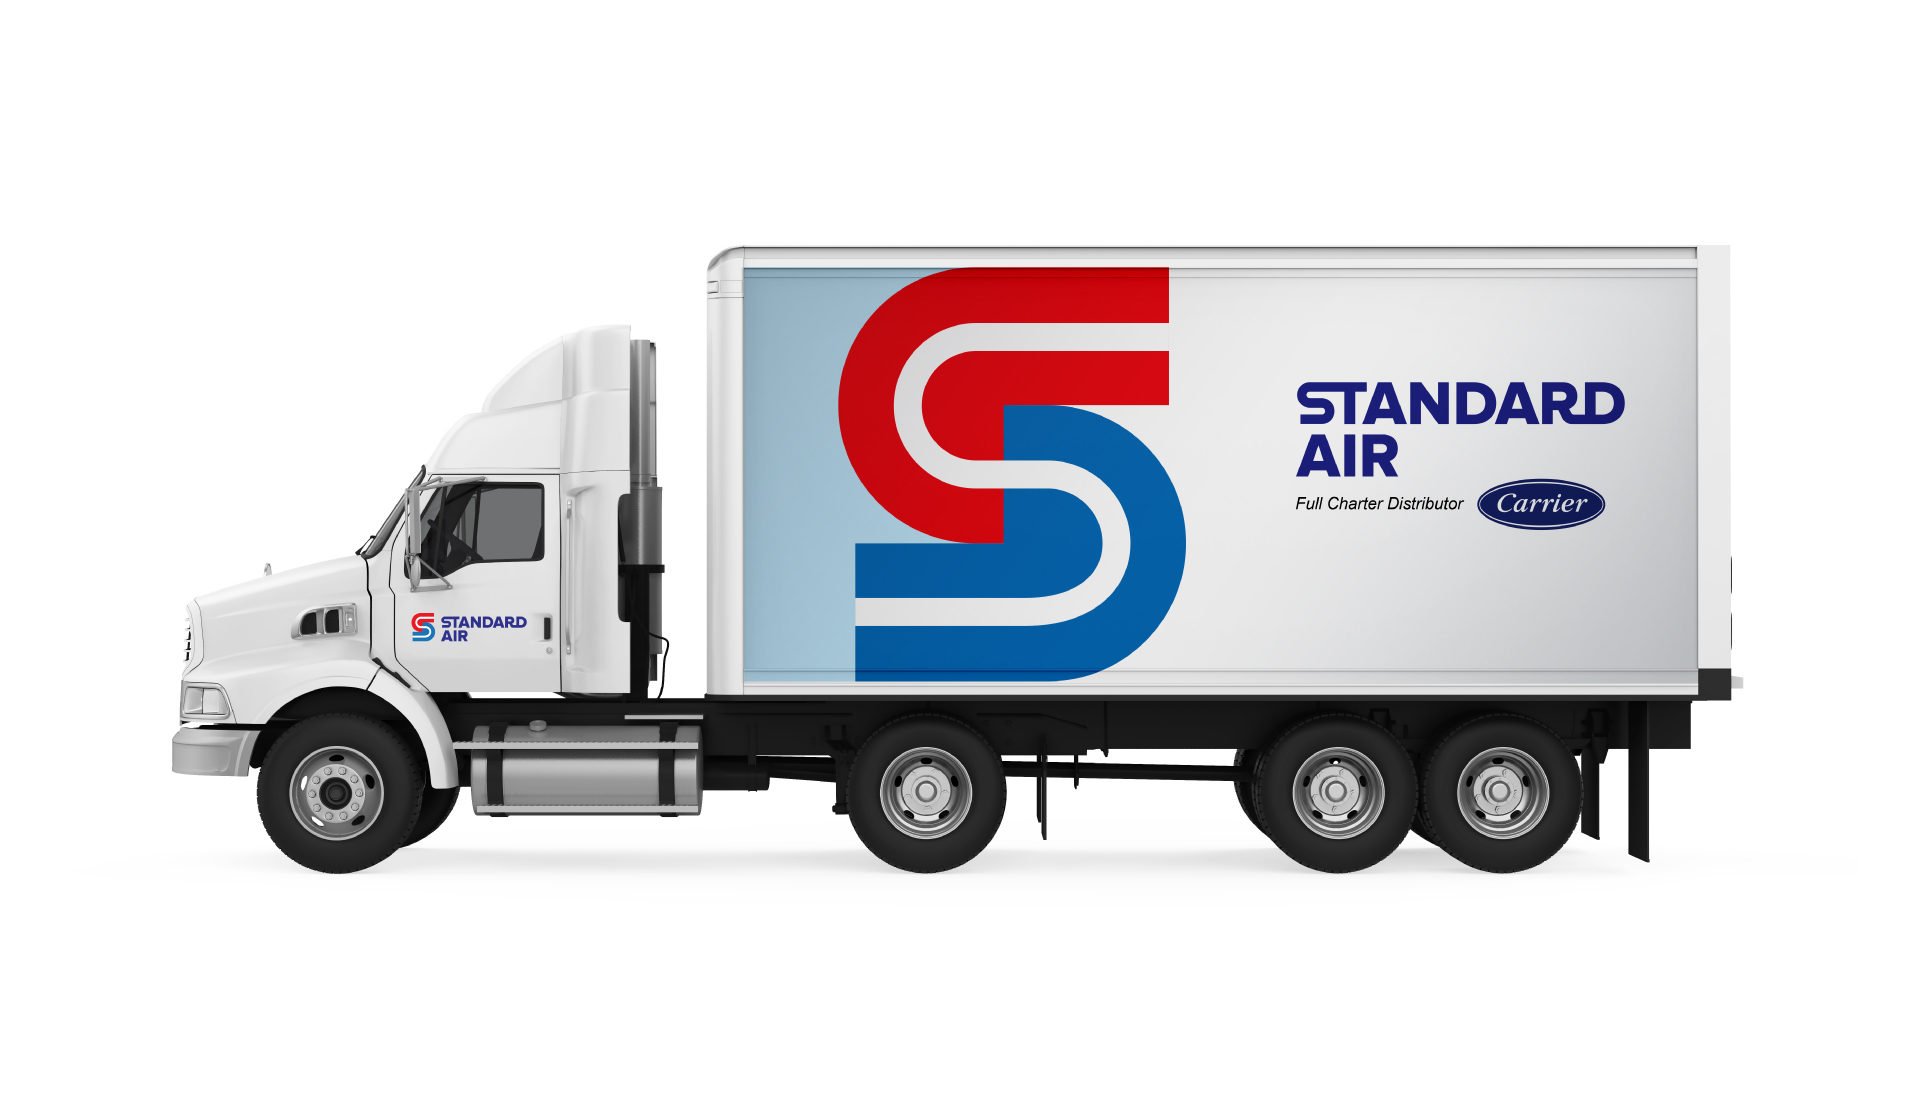 Standard Air branded truck